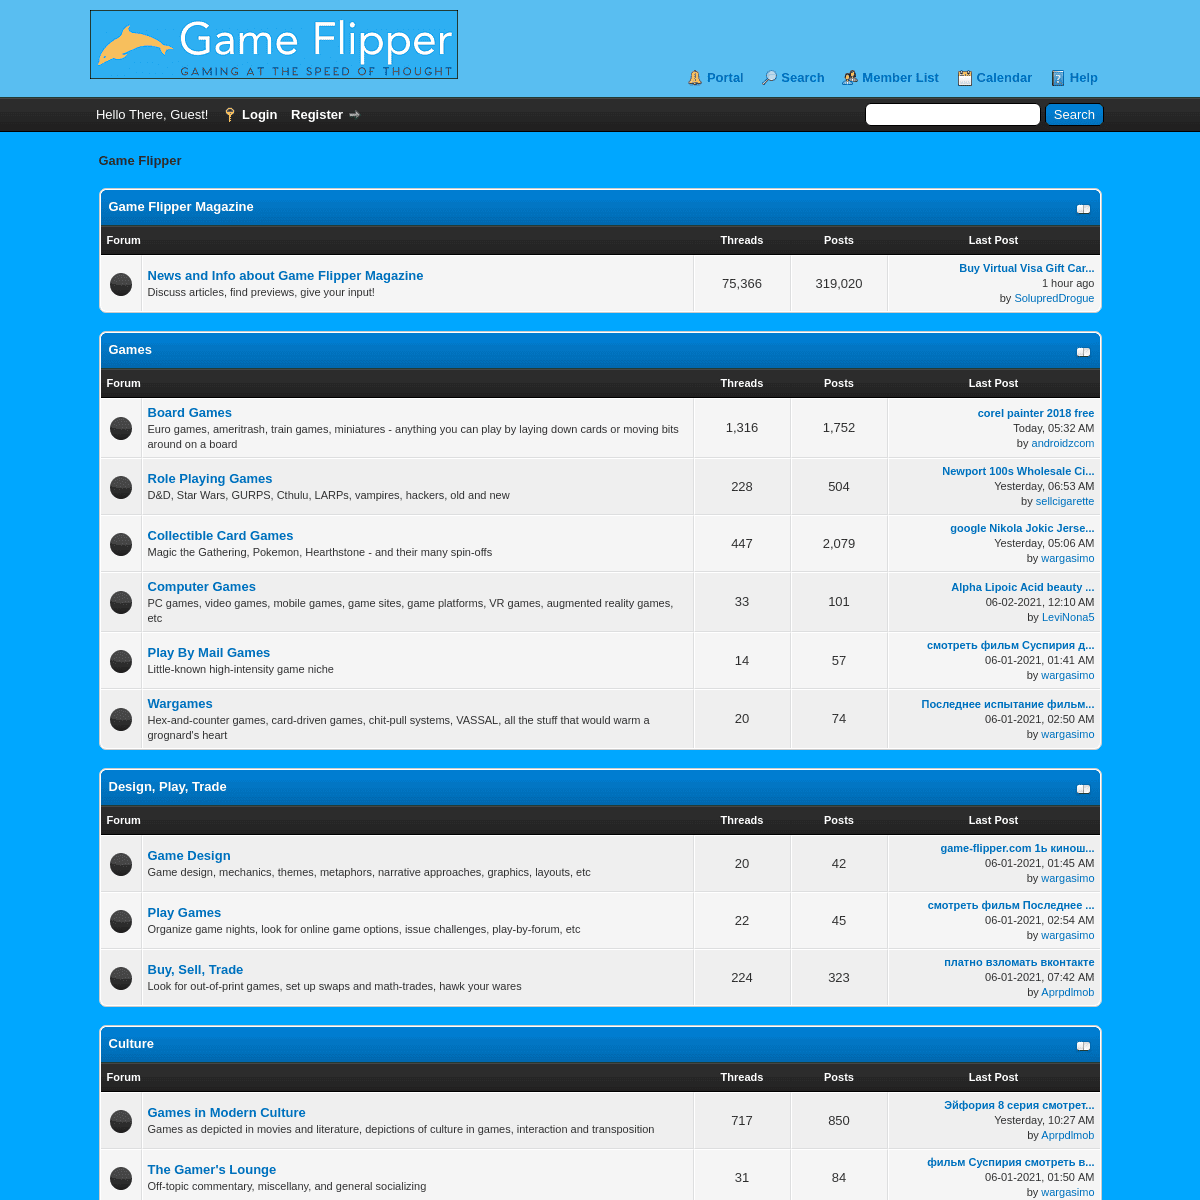 A complete backup of https://game-flipper.com